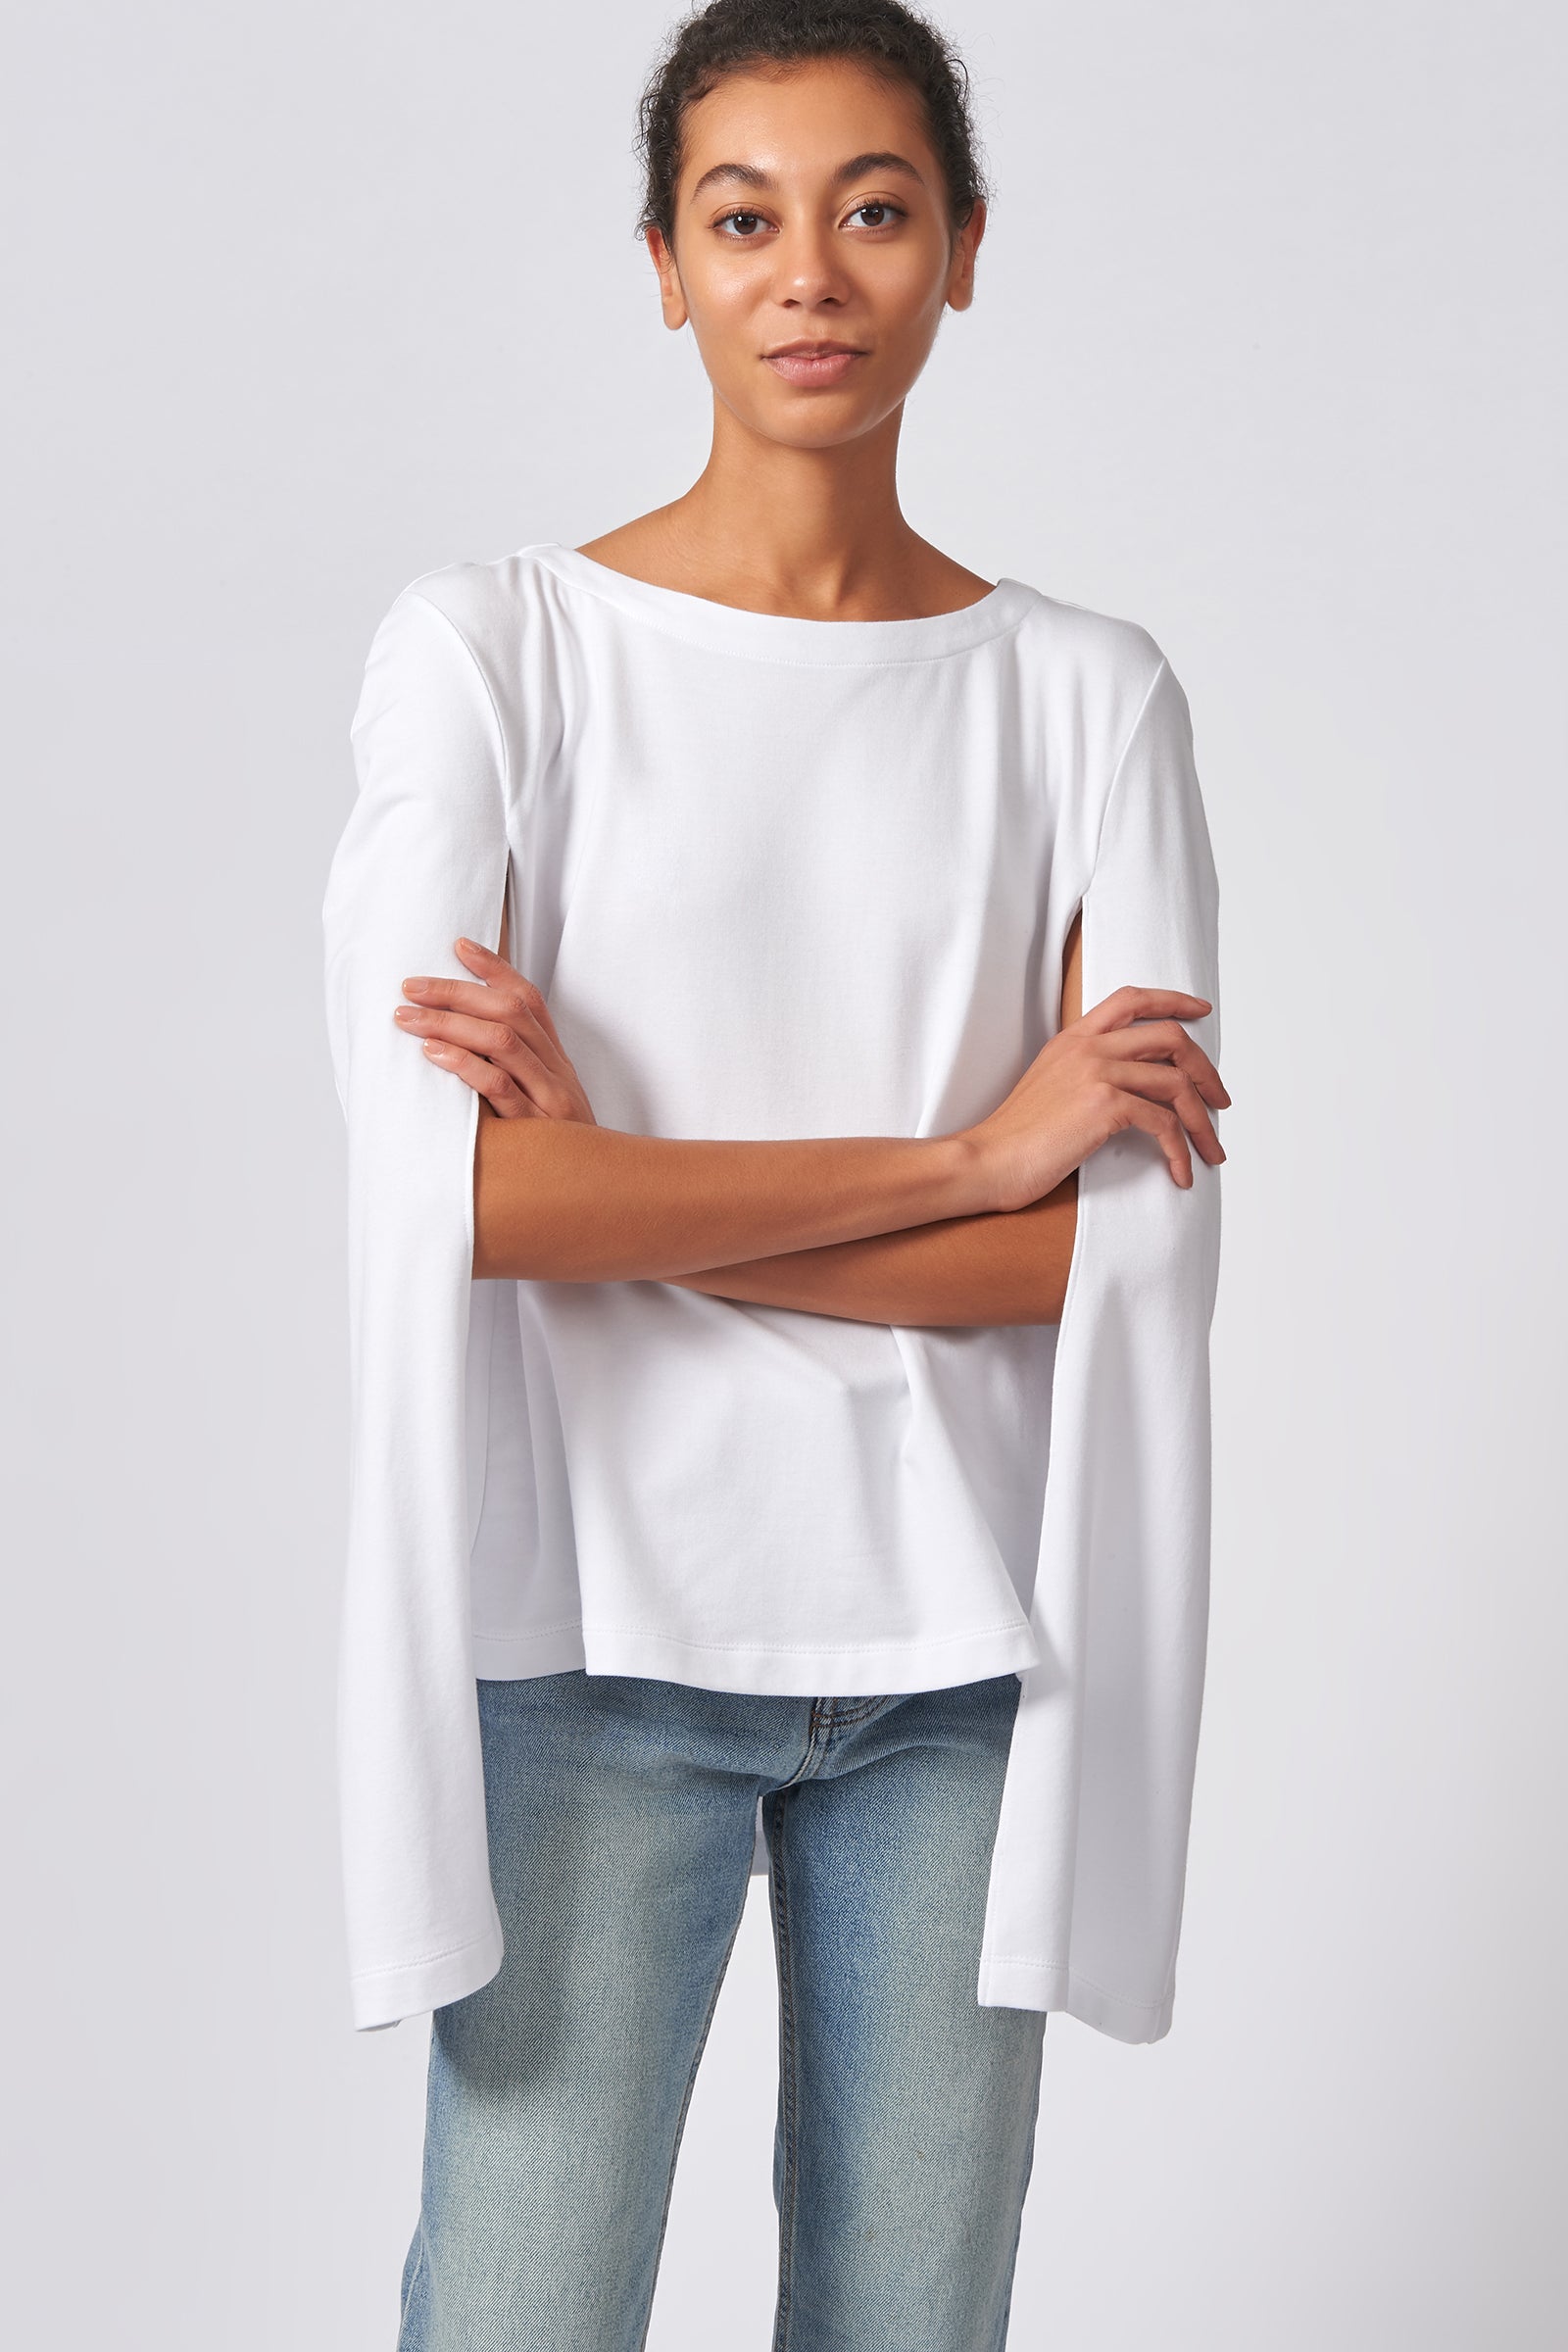 Kal Rieman Cape Sweatshirt in White on Model Front View